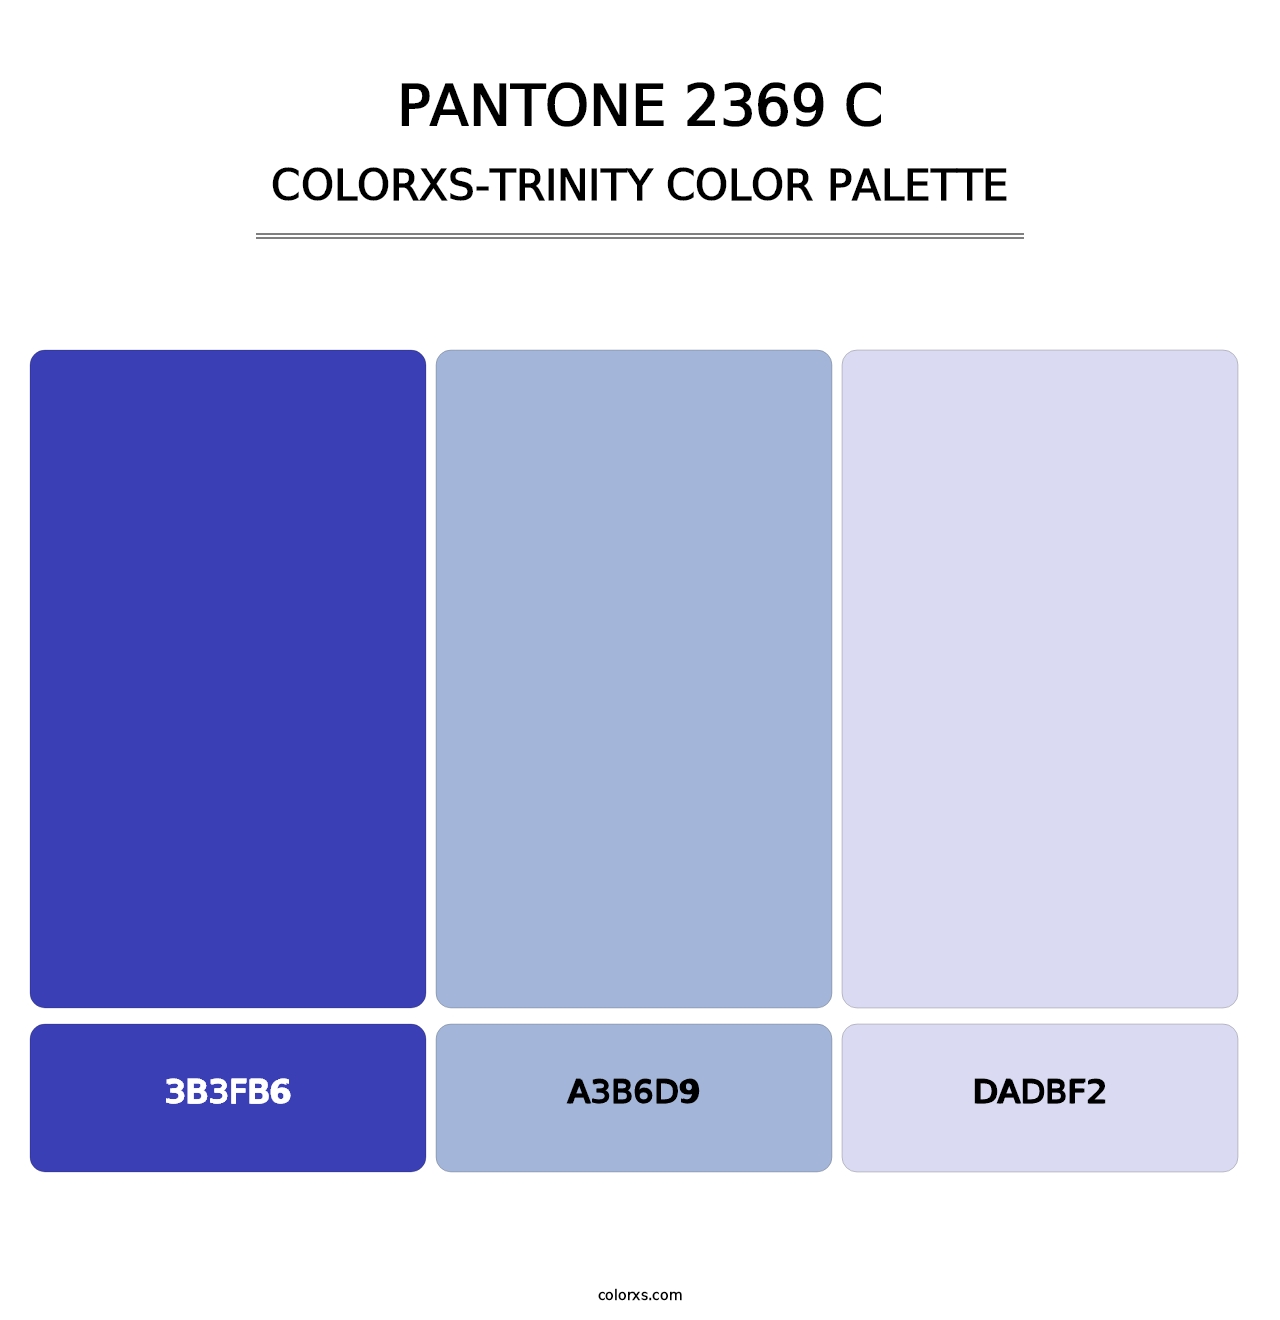 PANTONE 2369 C - Colorxs Trinity Palette